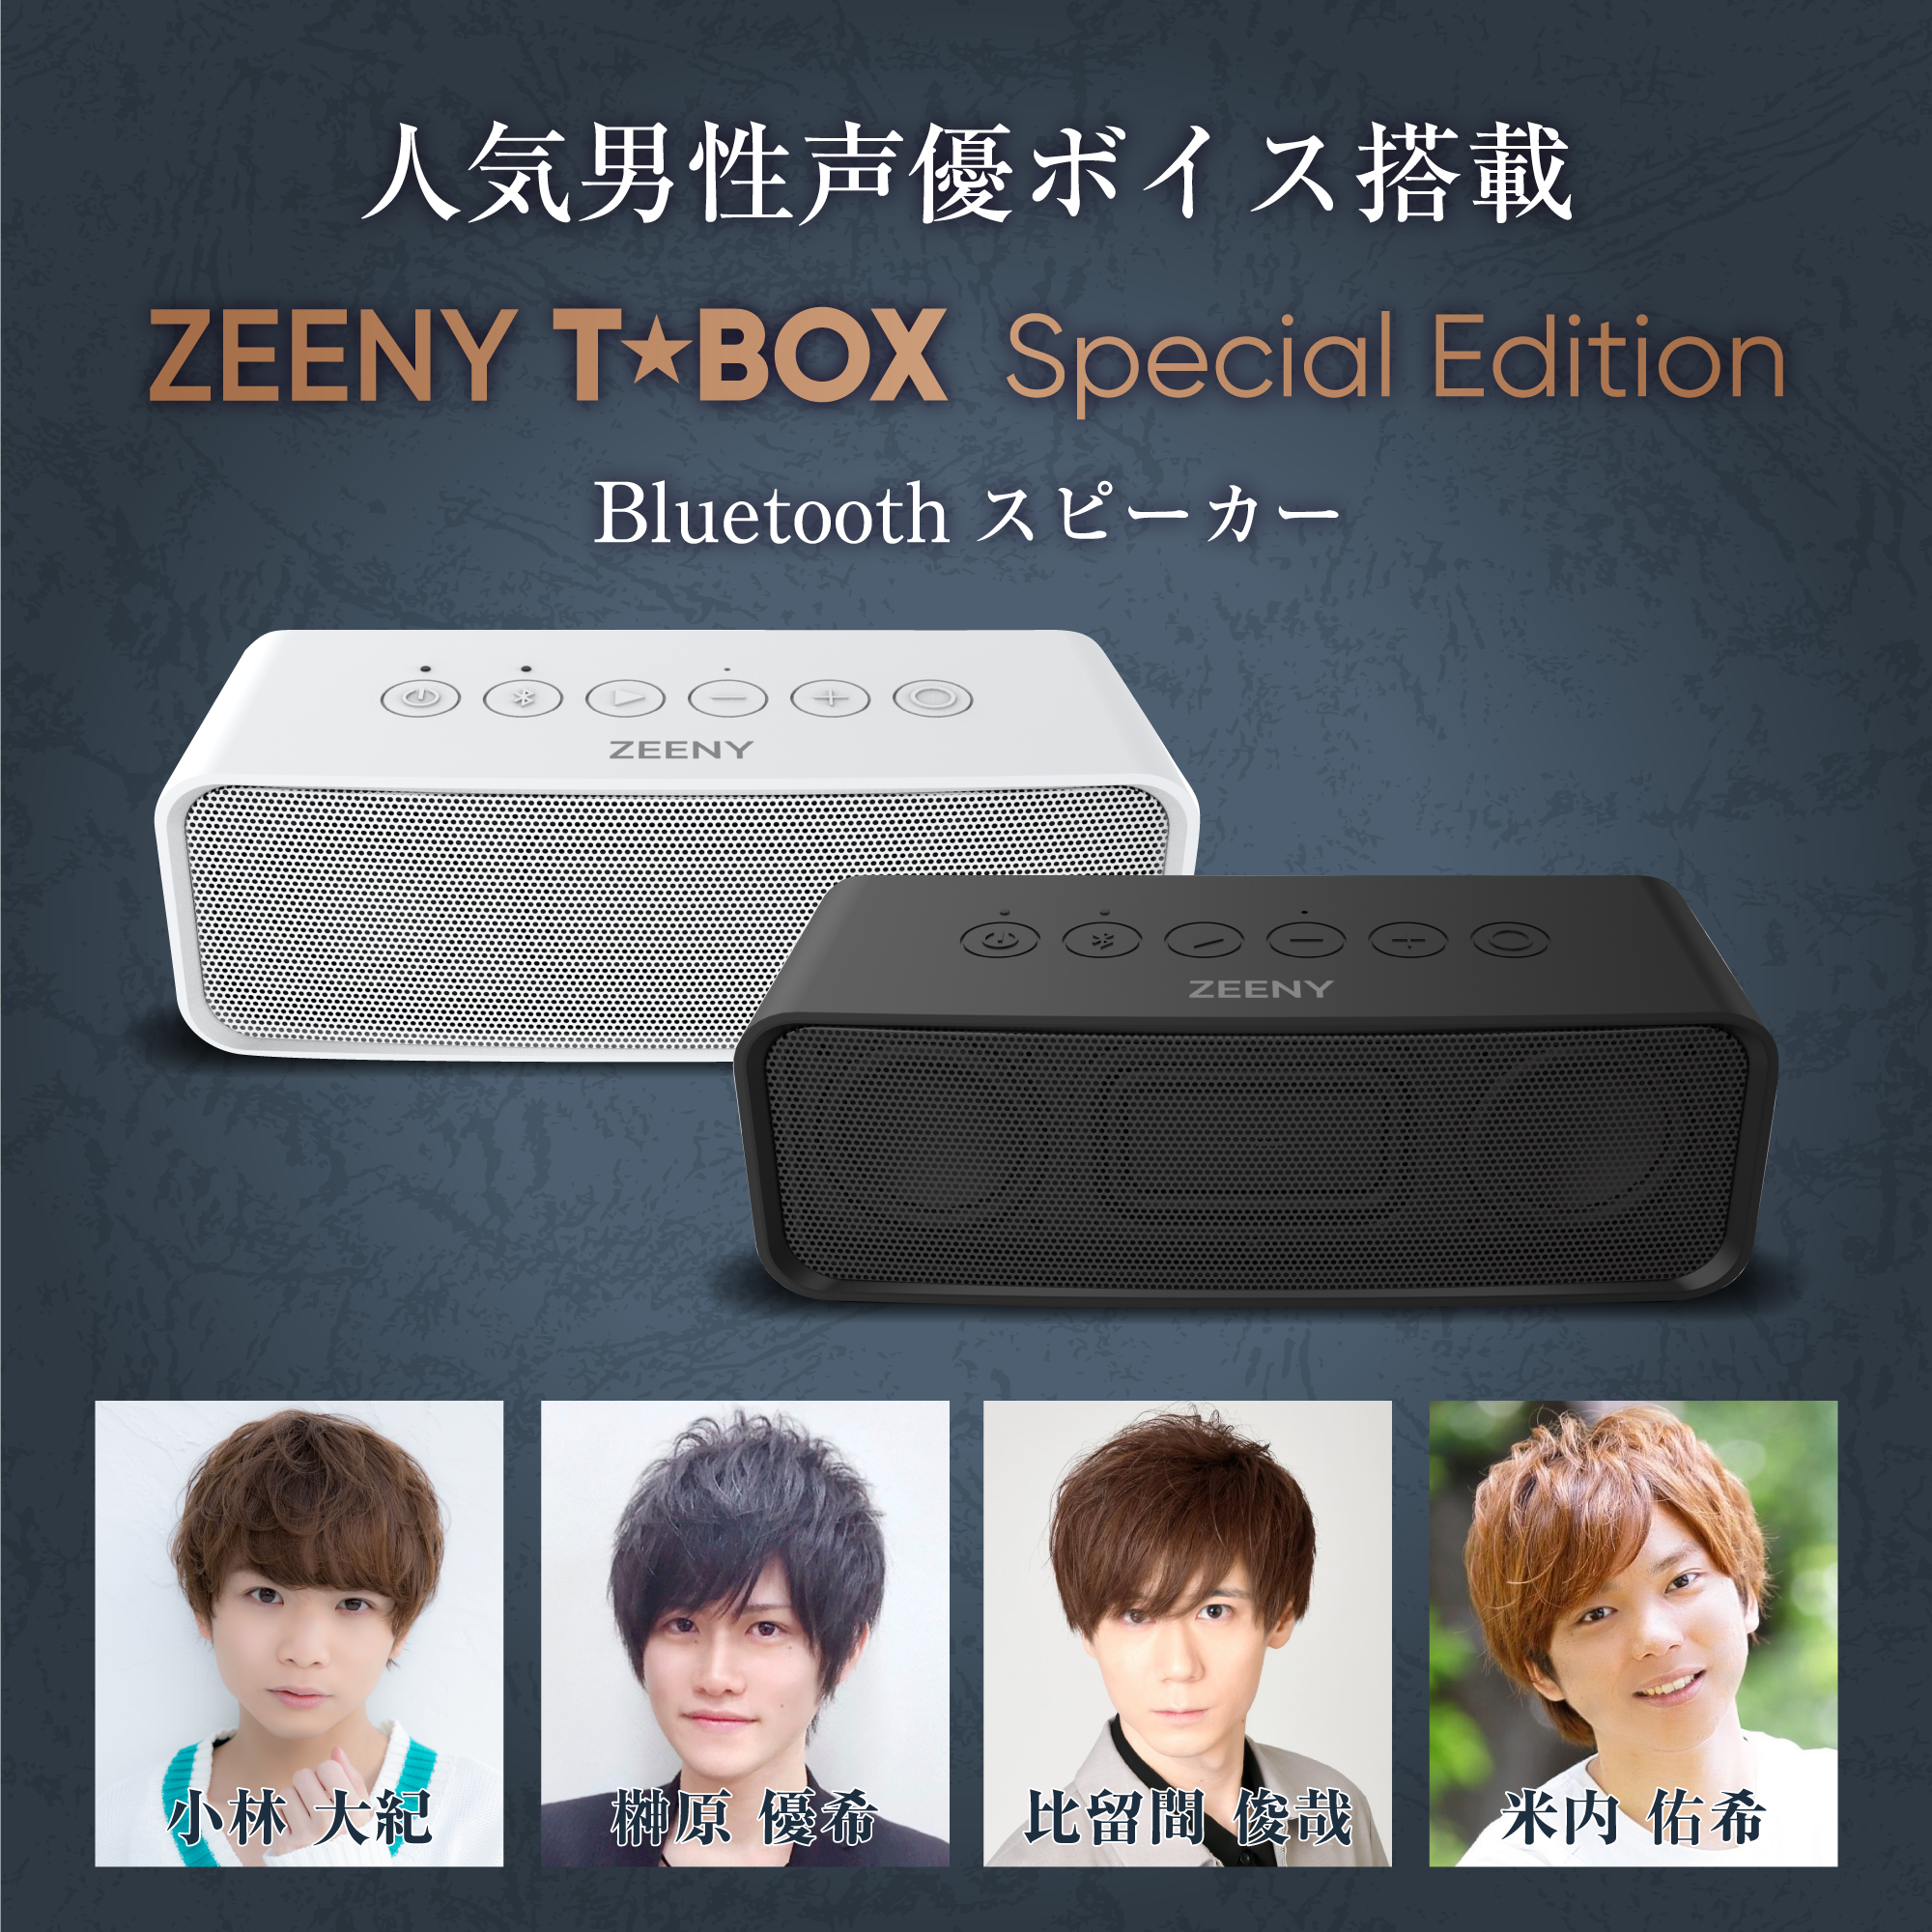 Zeeny T☆Box Special Edition】『小林 大紀』『榊原 優希』『比留間 